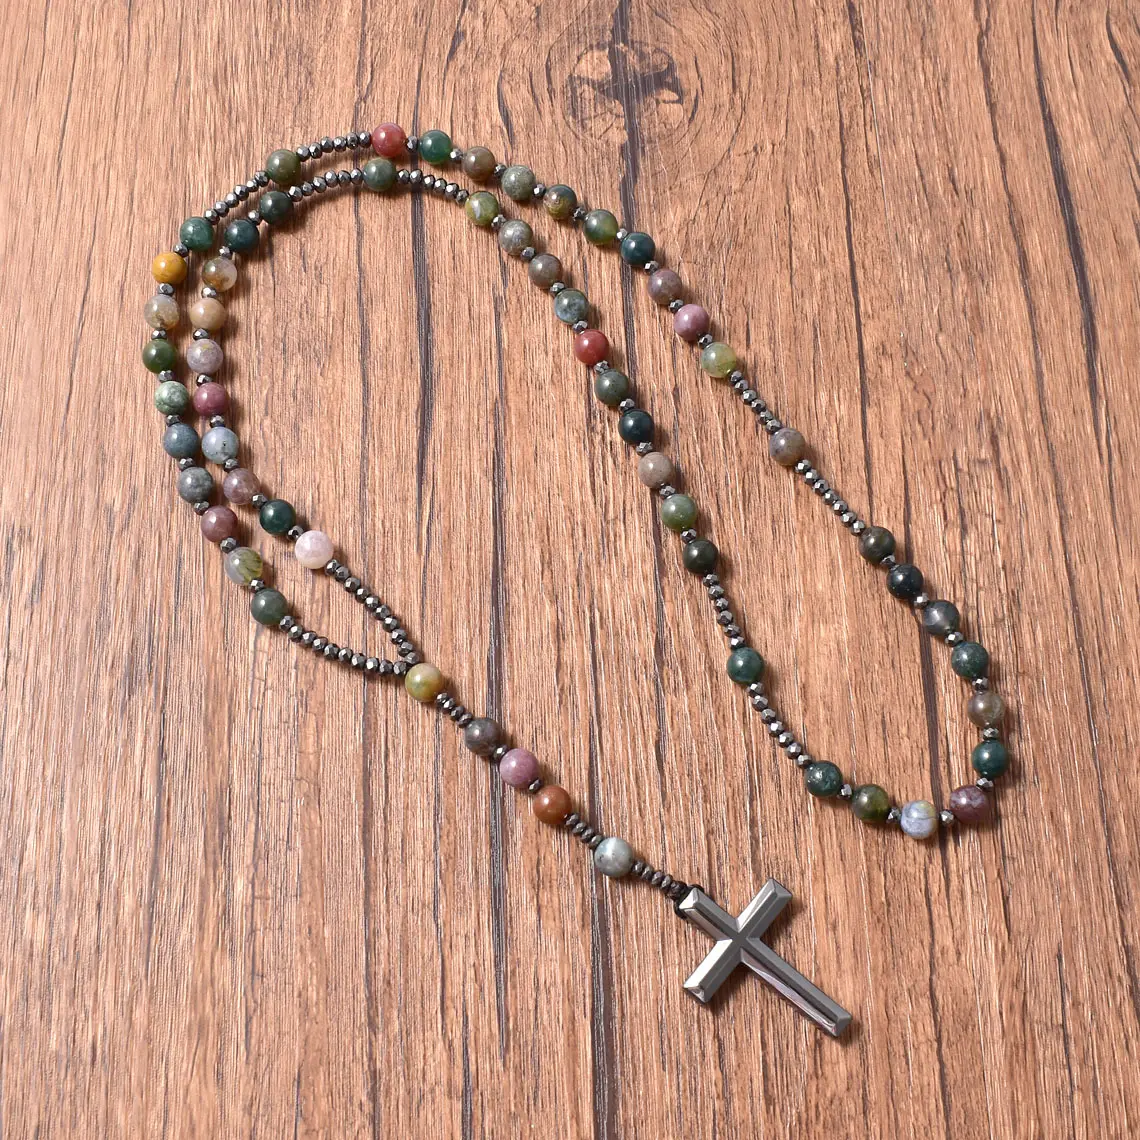 Cross Long Necklace Hematite Crucifix Stone Protection India Agate Catholic Necklace Christian Jewelry Religious Rosary Gift